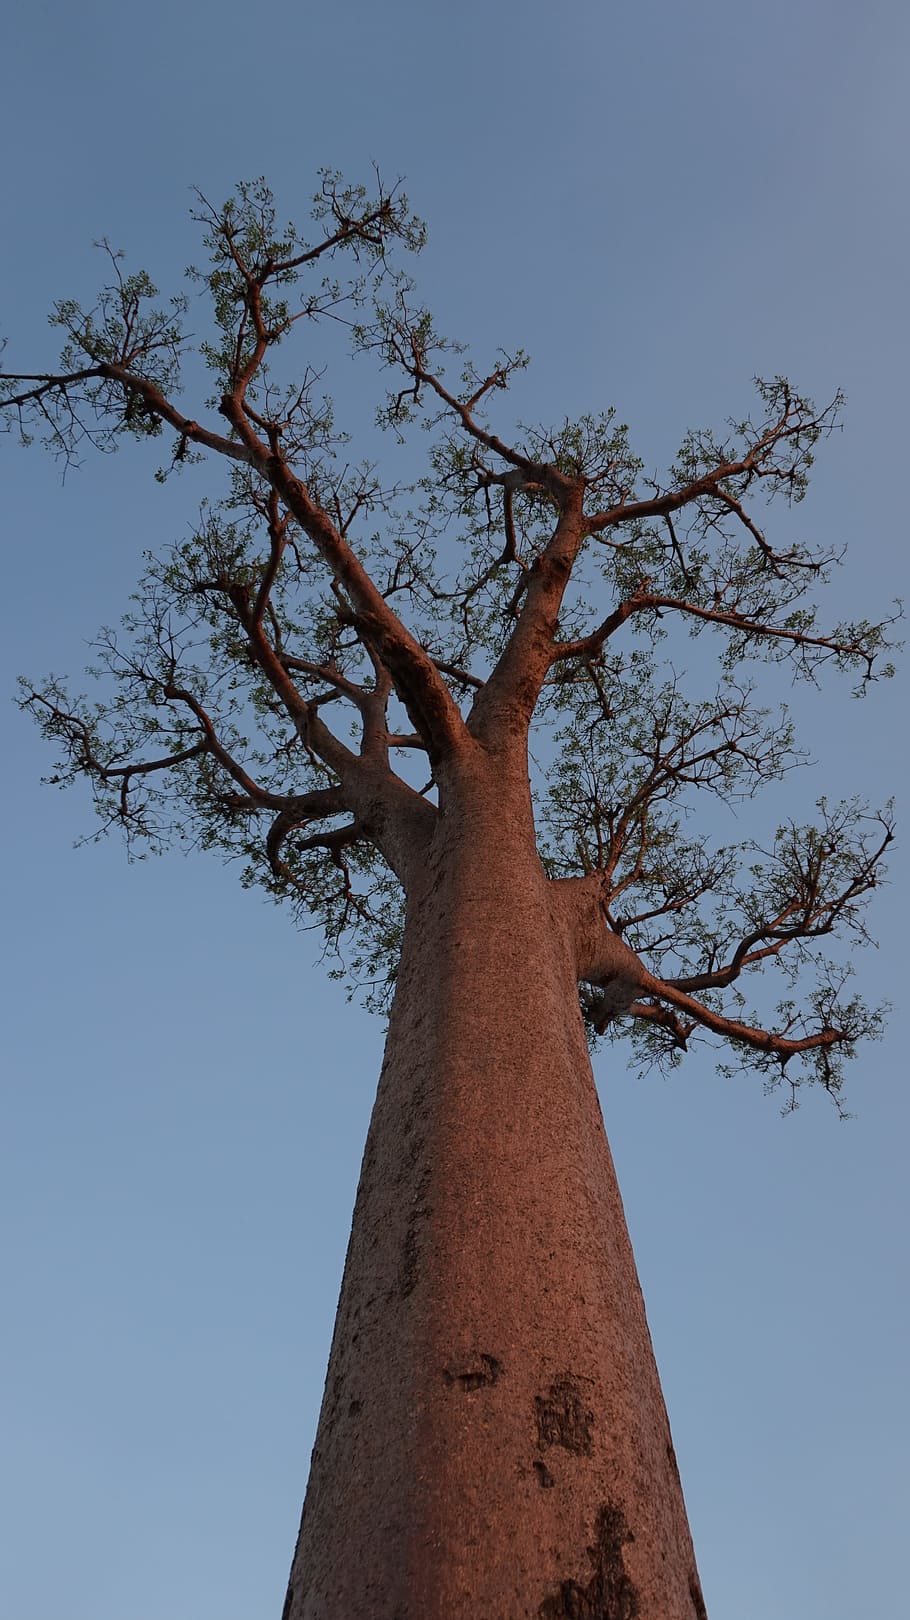 Tree, Baobab, Madagascar, Sky, High, sky, high, tree trunk, branch, outdoors, day